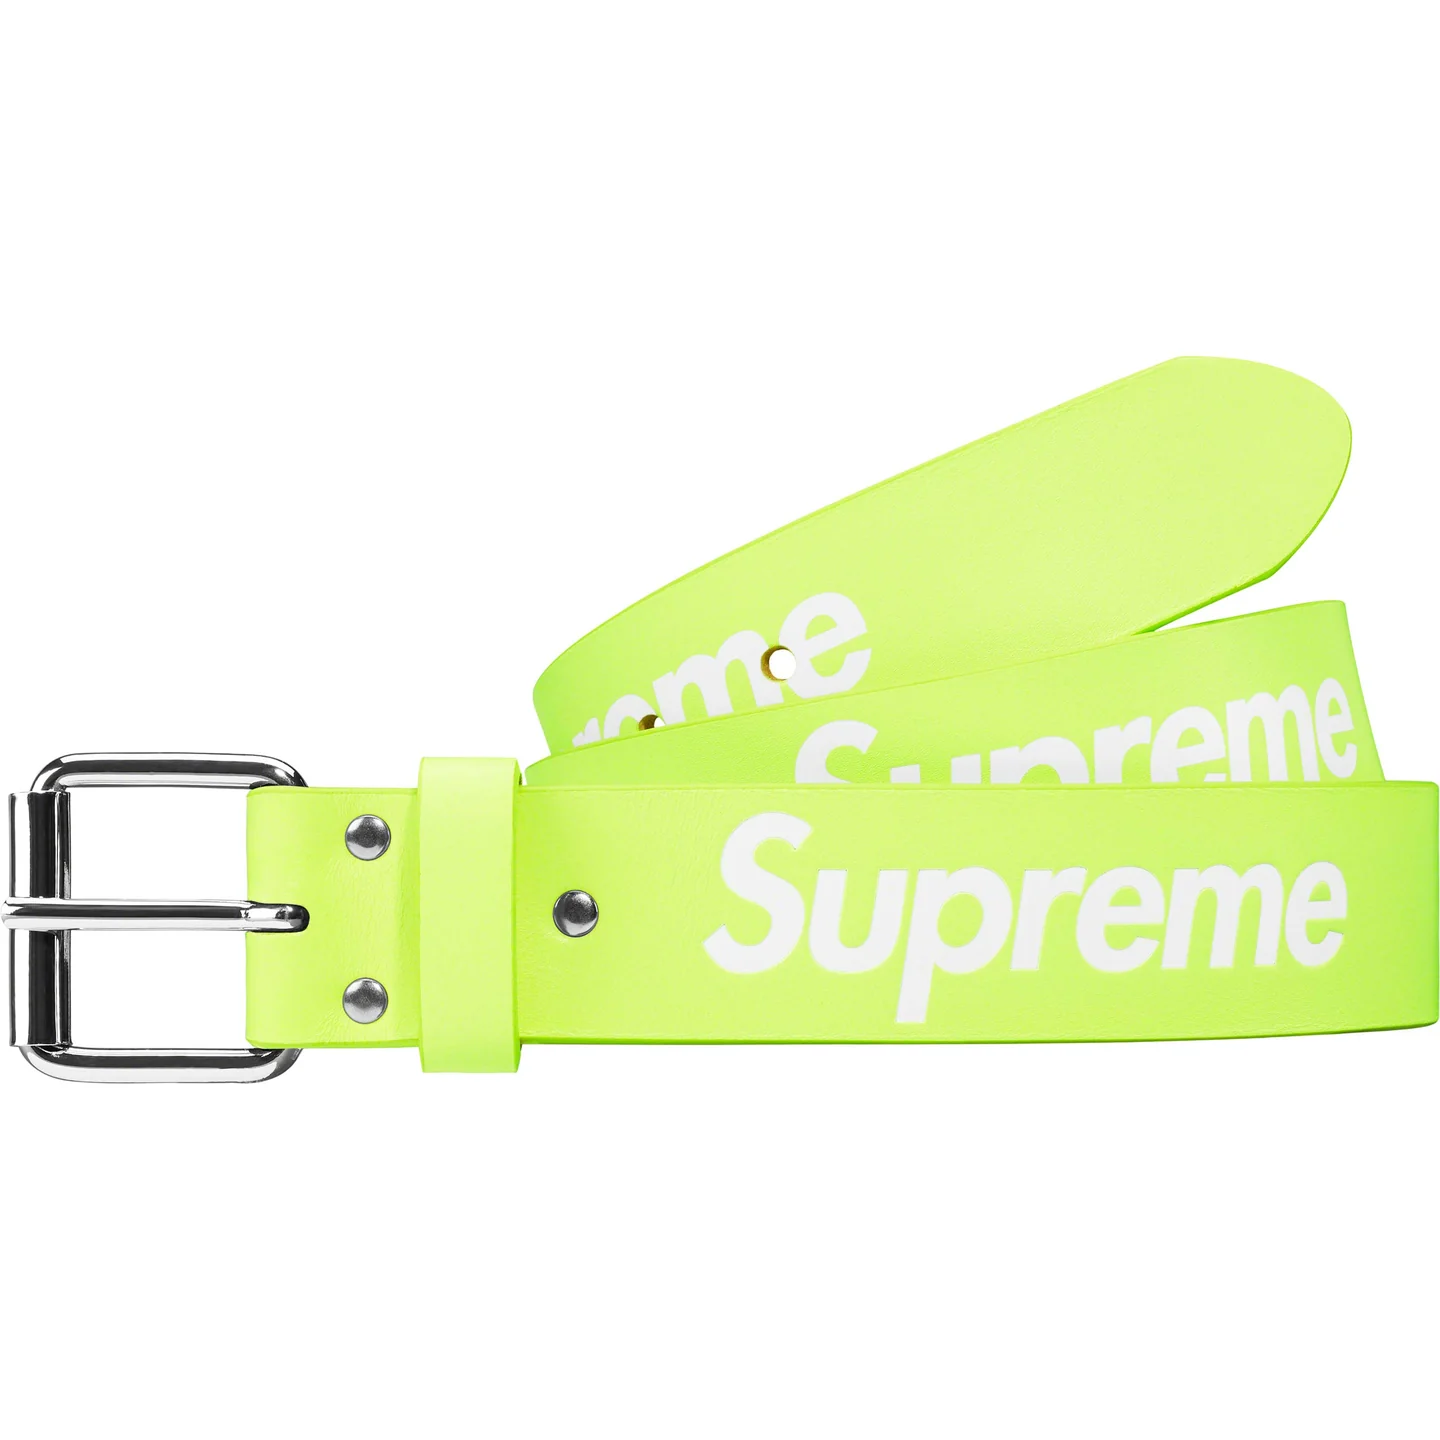 Supreme Repeat Leather Belt